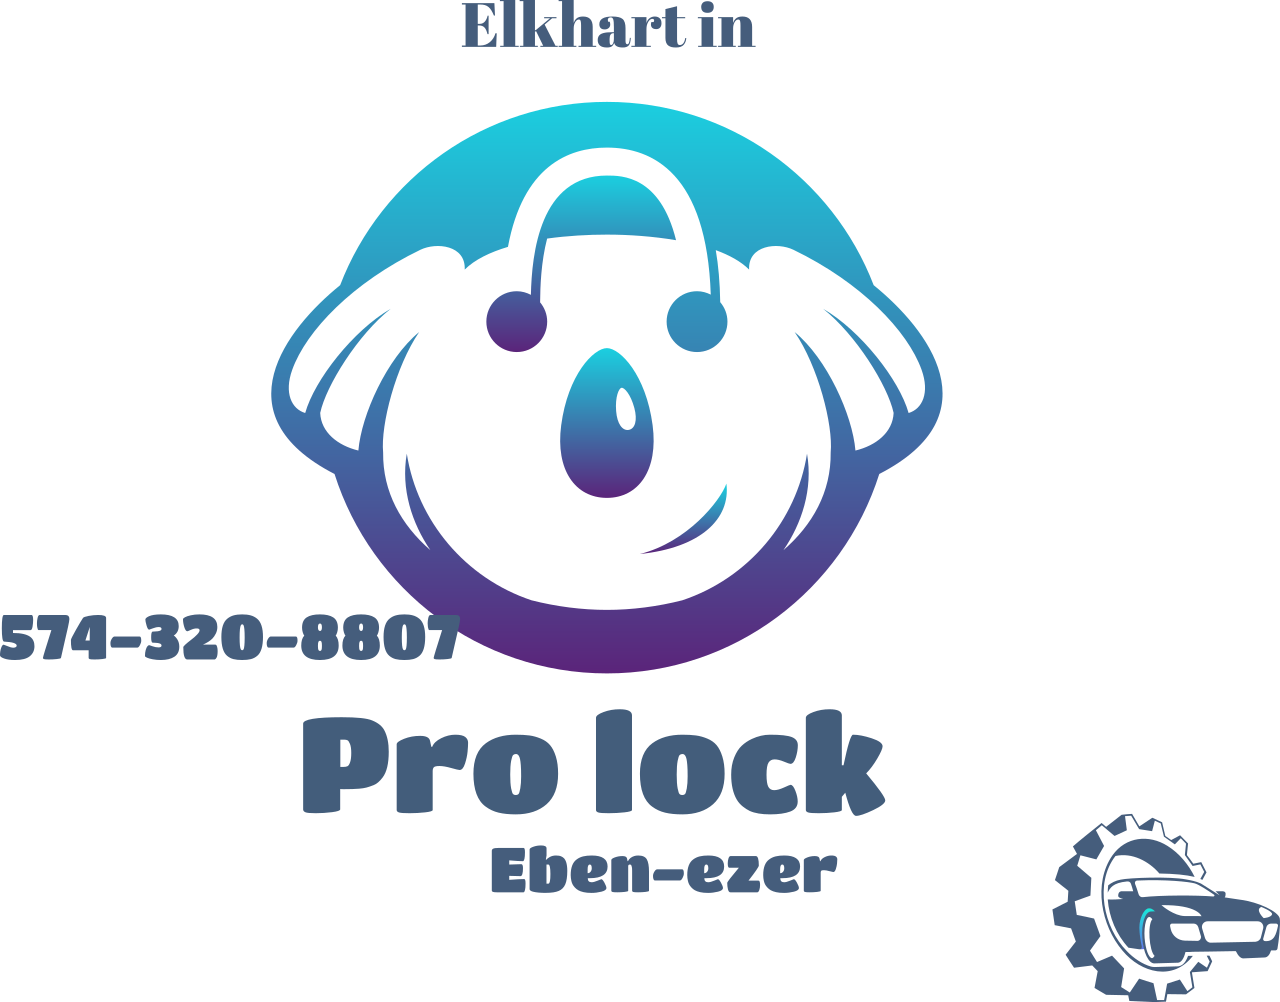 Pro lock 's web page